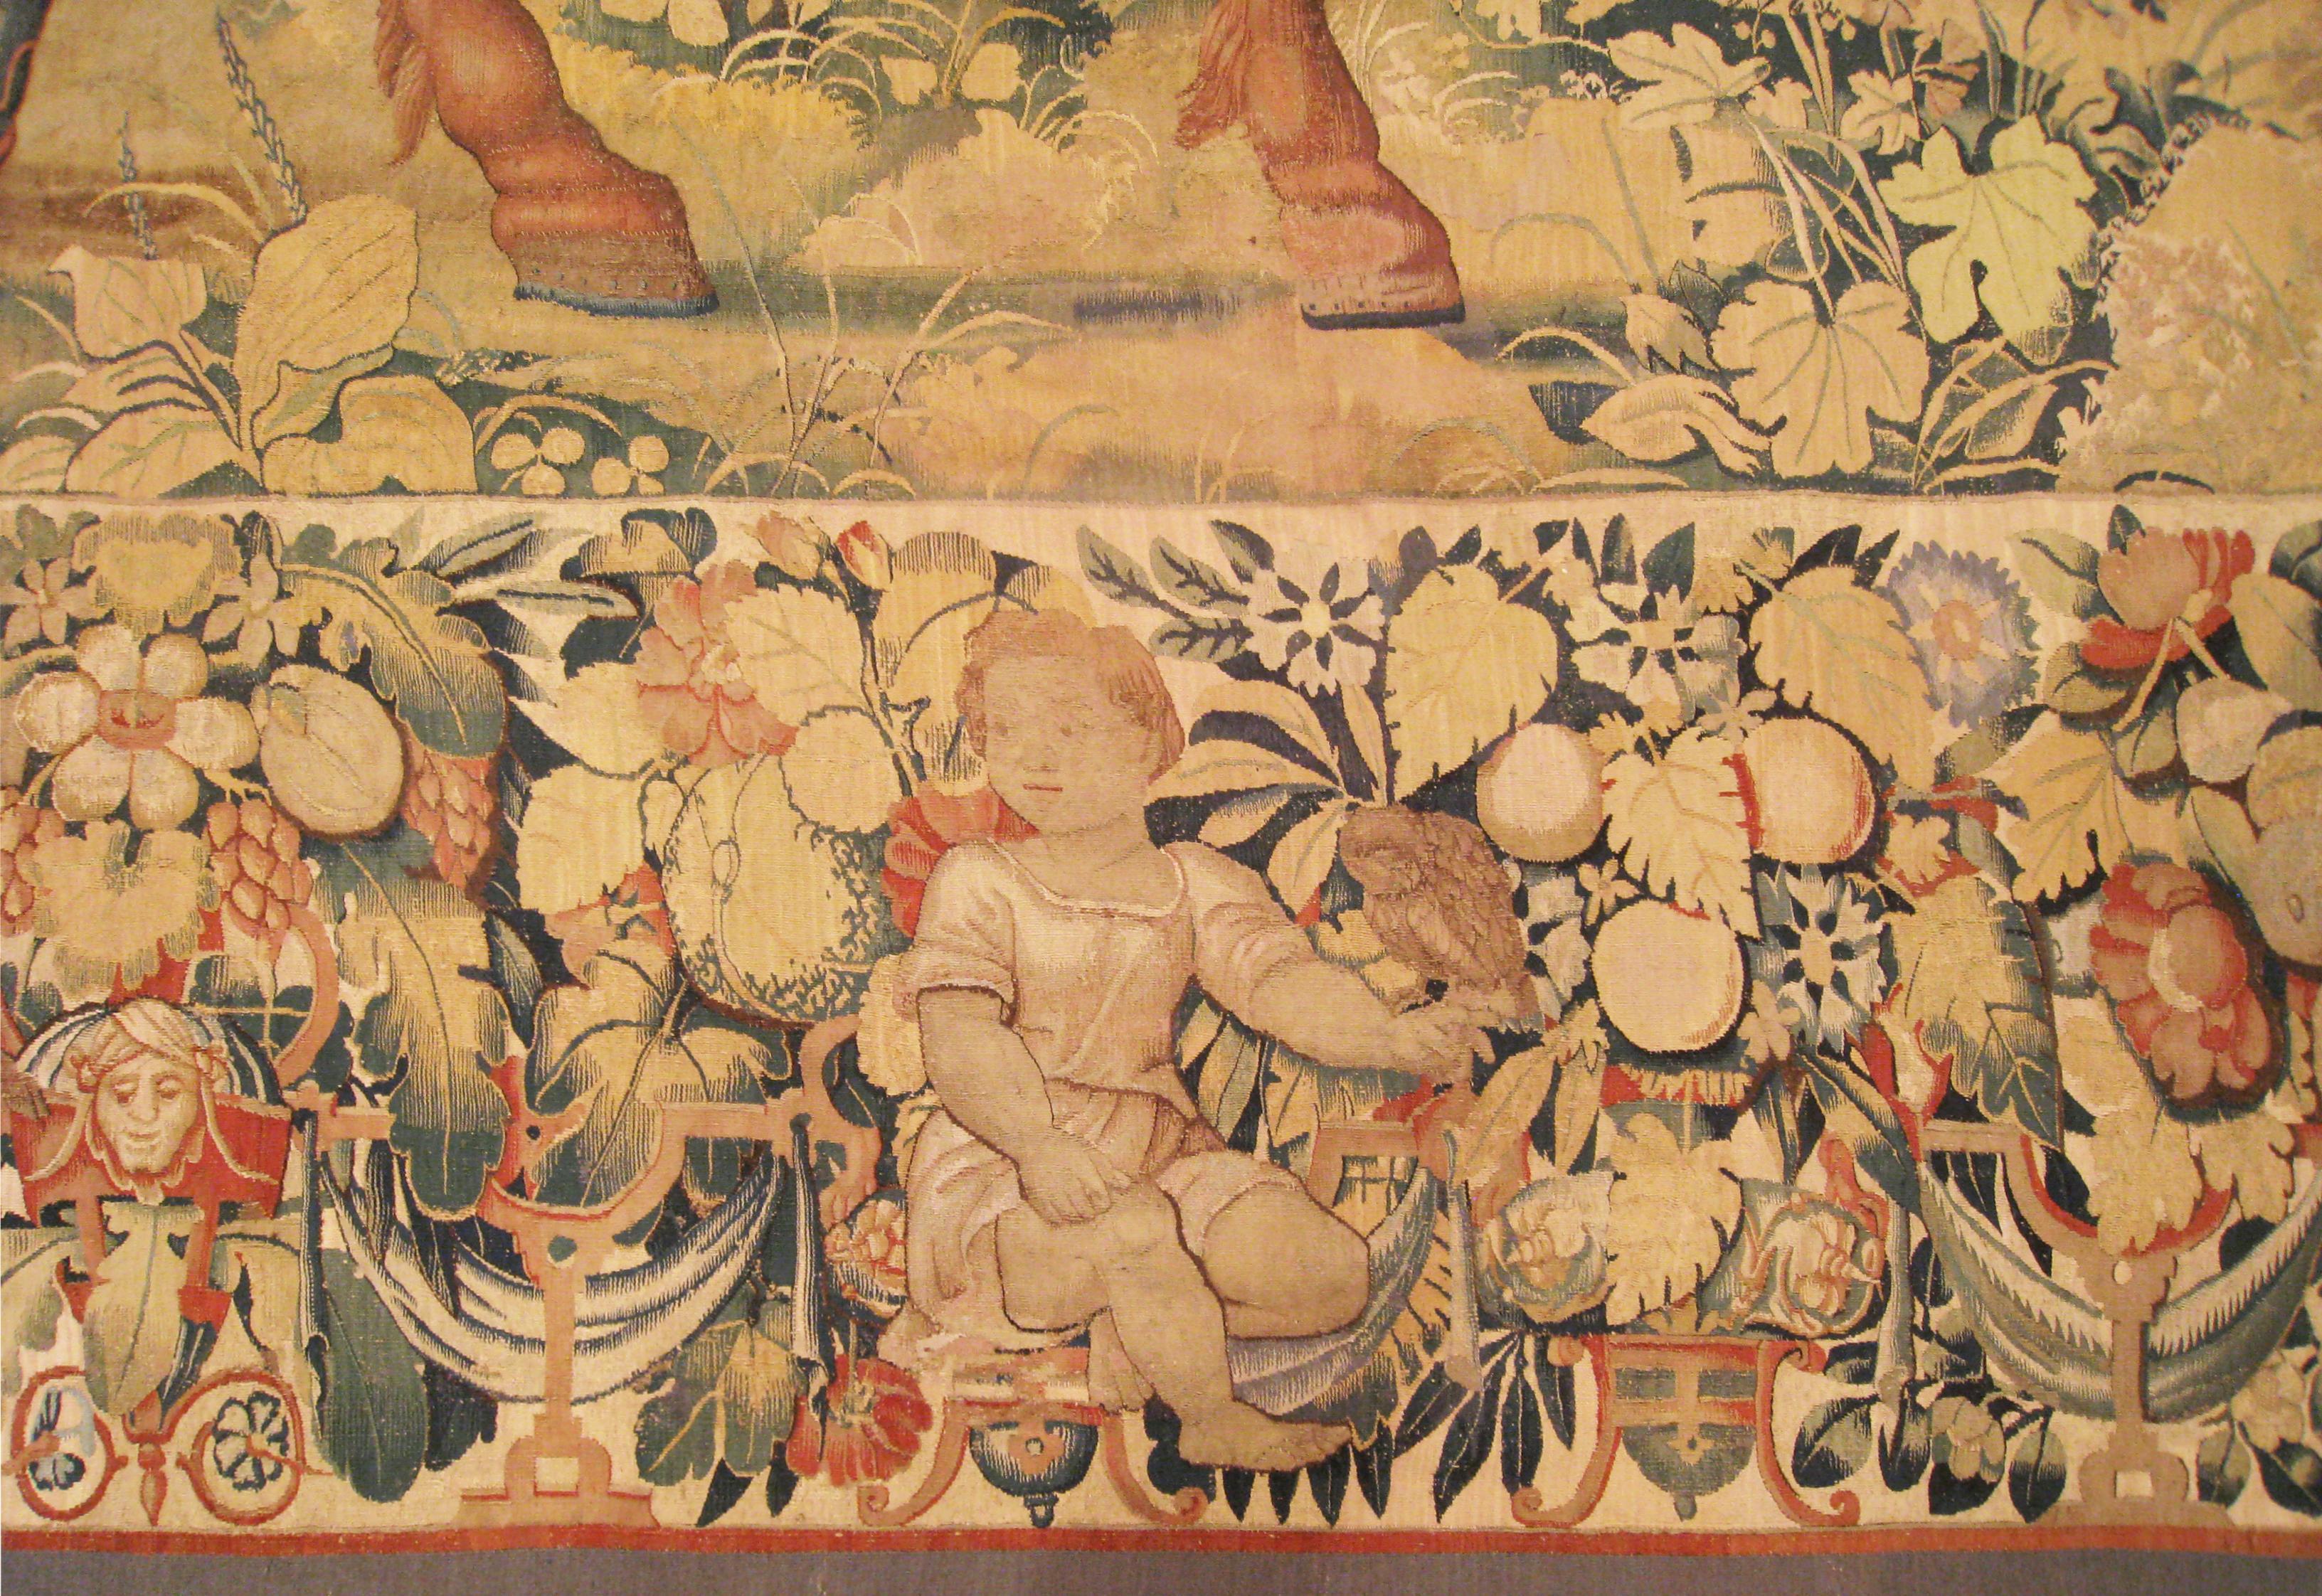 Hand-Woven 16th Century Brussels Historical Tapestry, Depicting Julius Caesar on Horseback